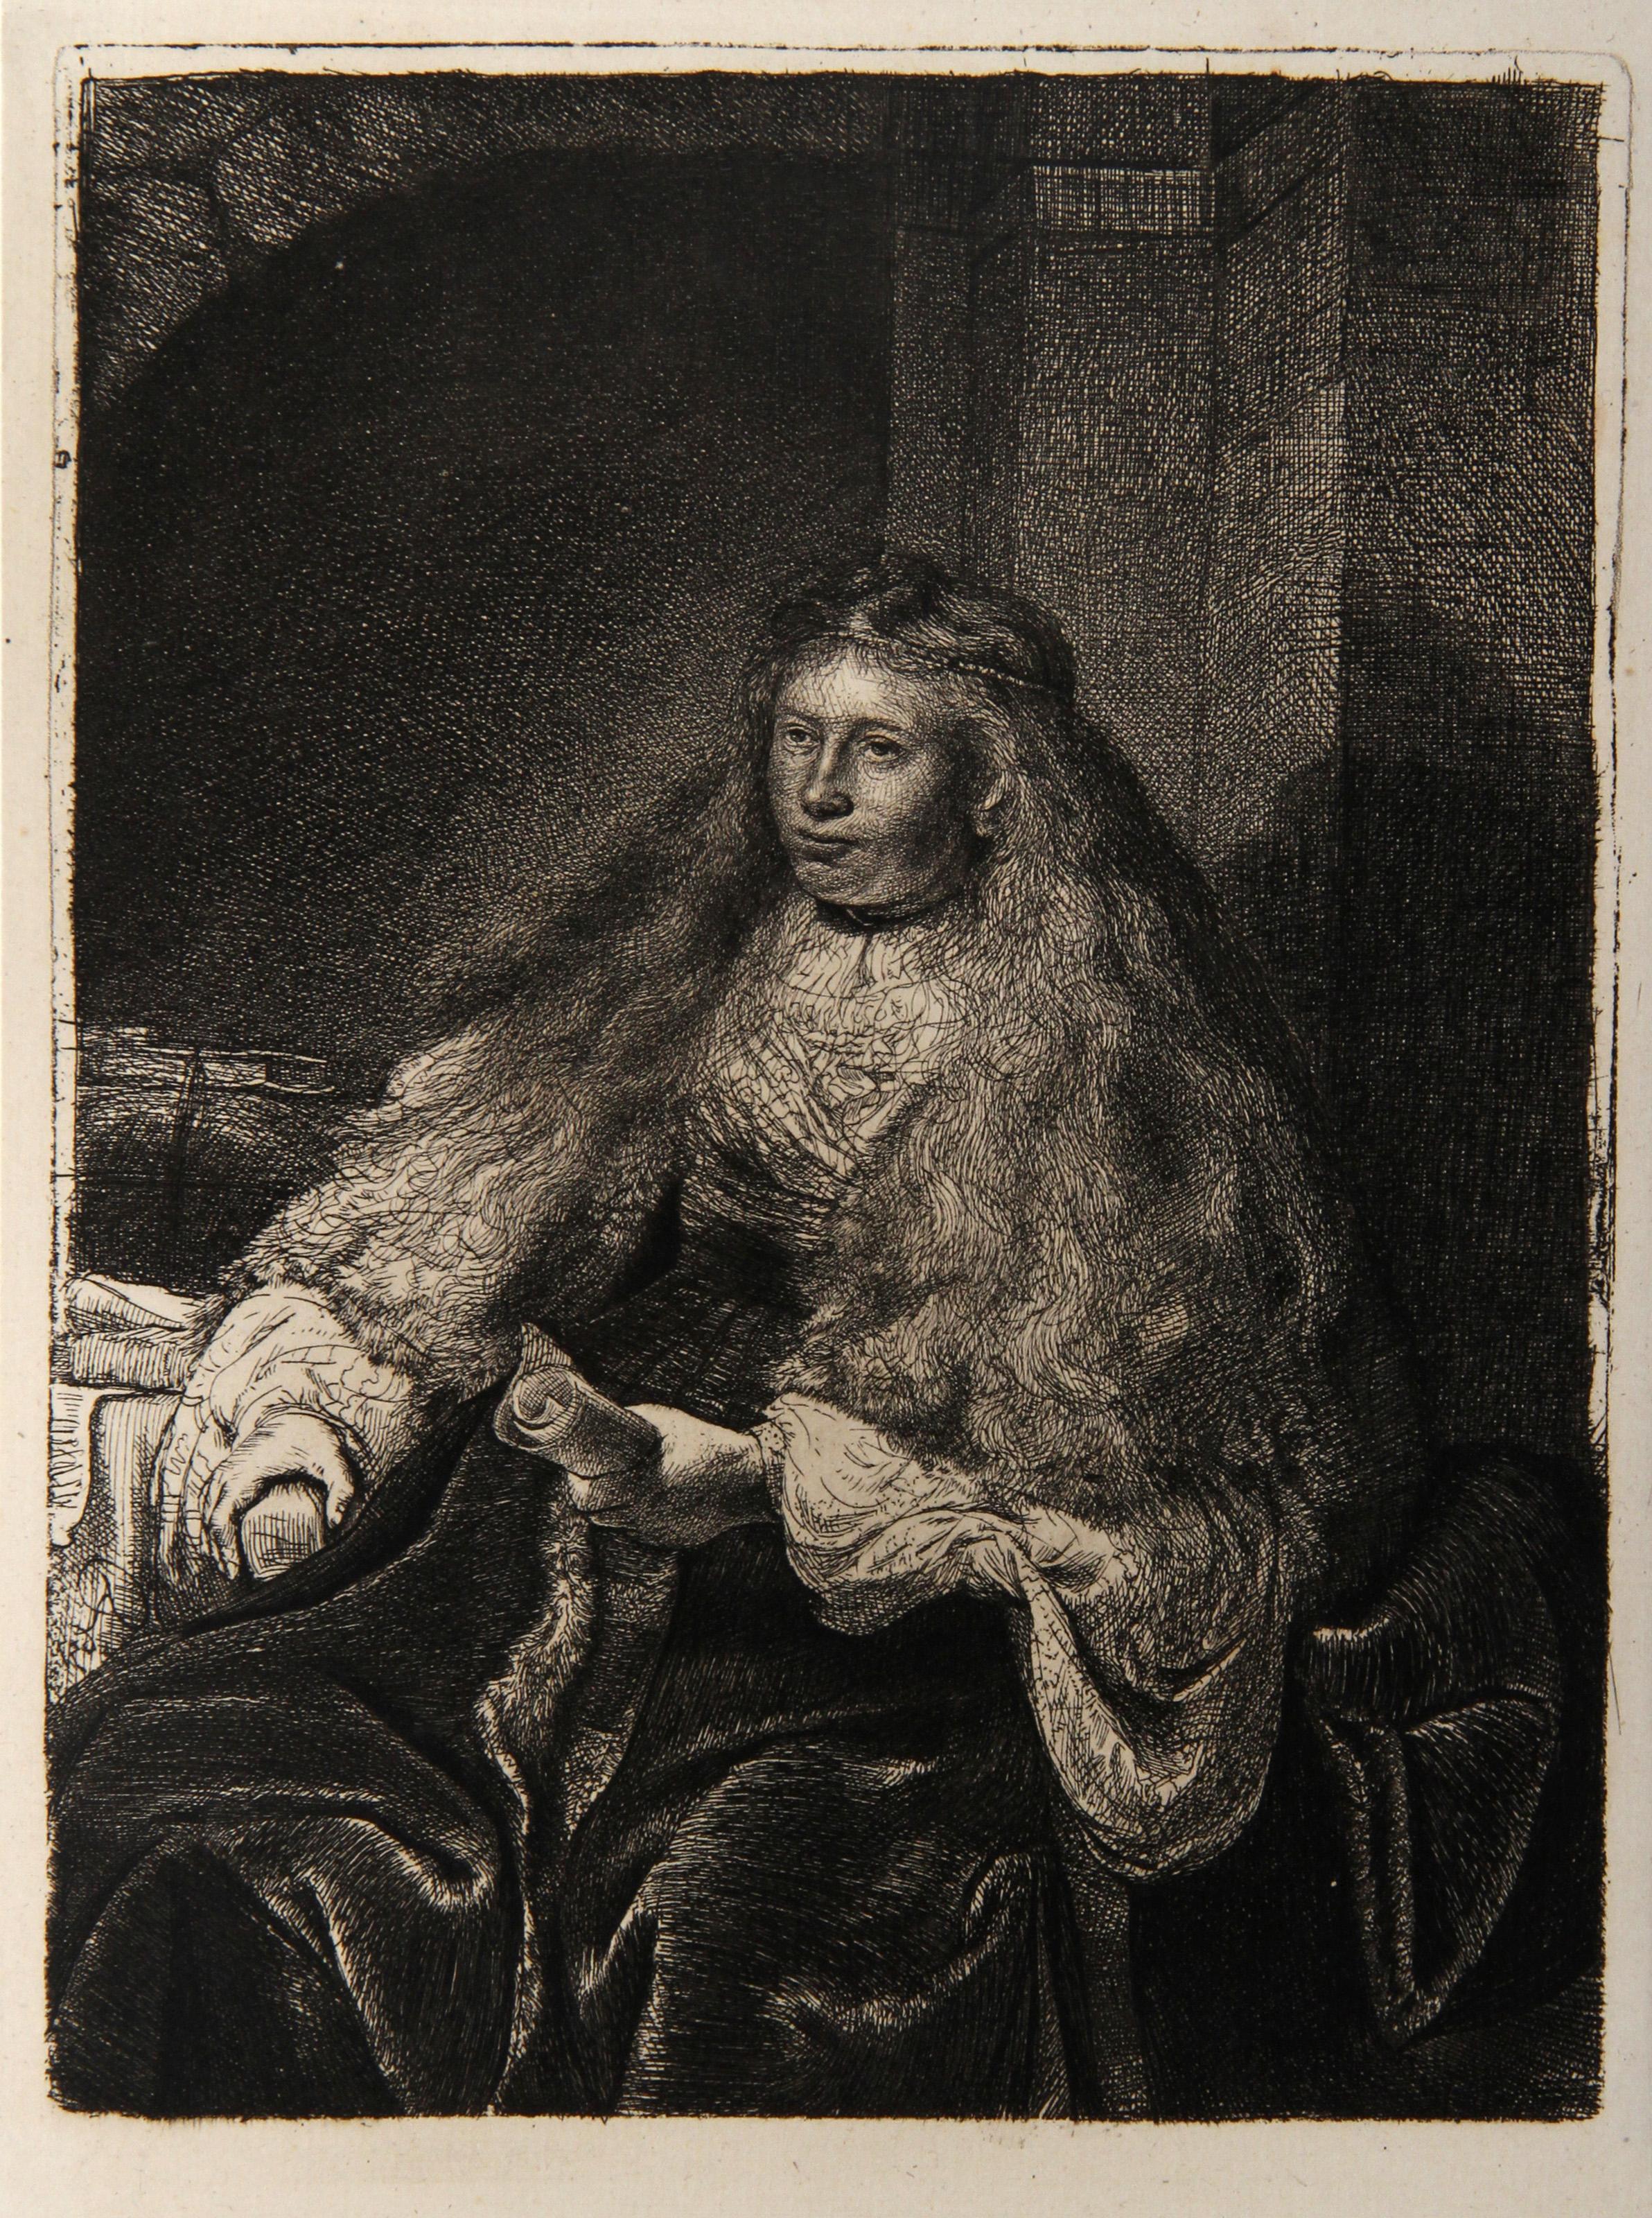 Artist: Rembrandt van Rijn, After by Amand Durand, Dutch (1606 - 1669) -  The Great Jewish Bride (B340), Year: 1878 (of original 1635), Medium: Heliogravure, Size: 8.75  x 6.5 in. (22.23  x 16.51 cm), Printer: Amand Durand, Description: French